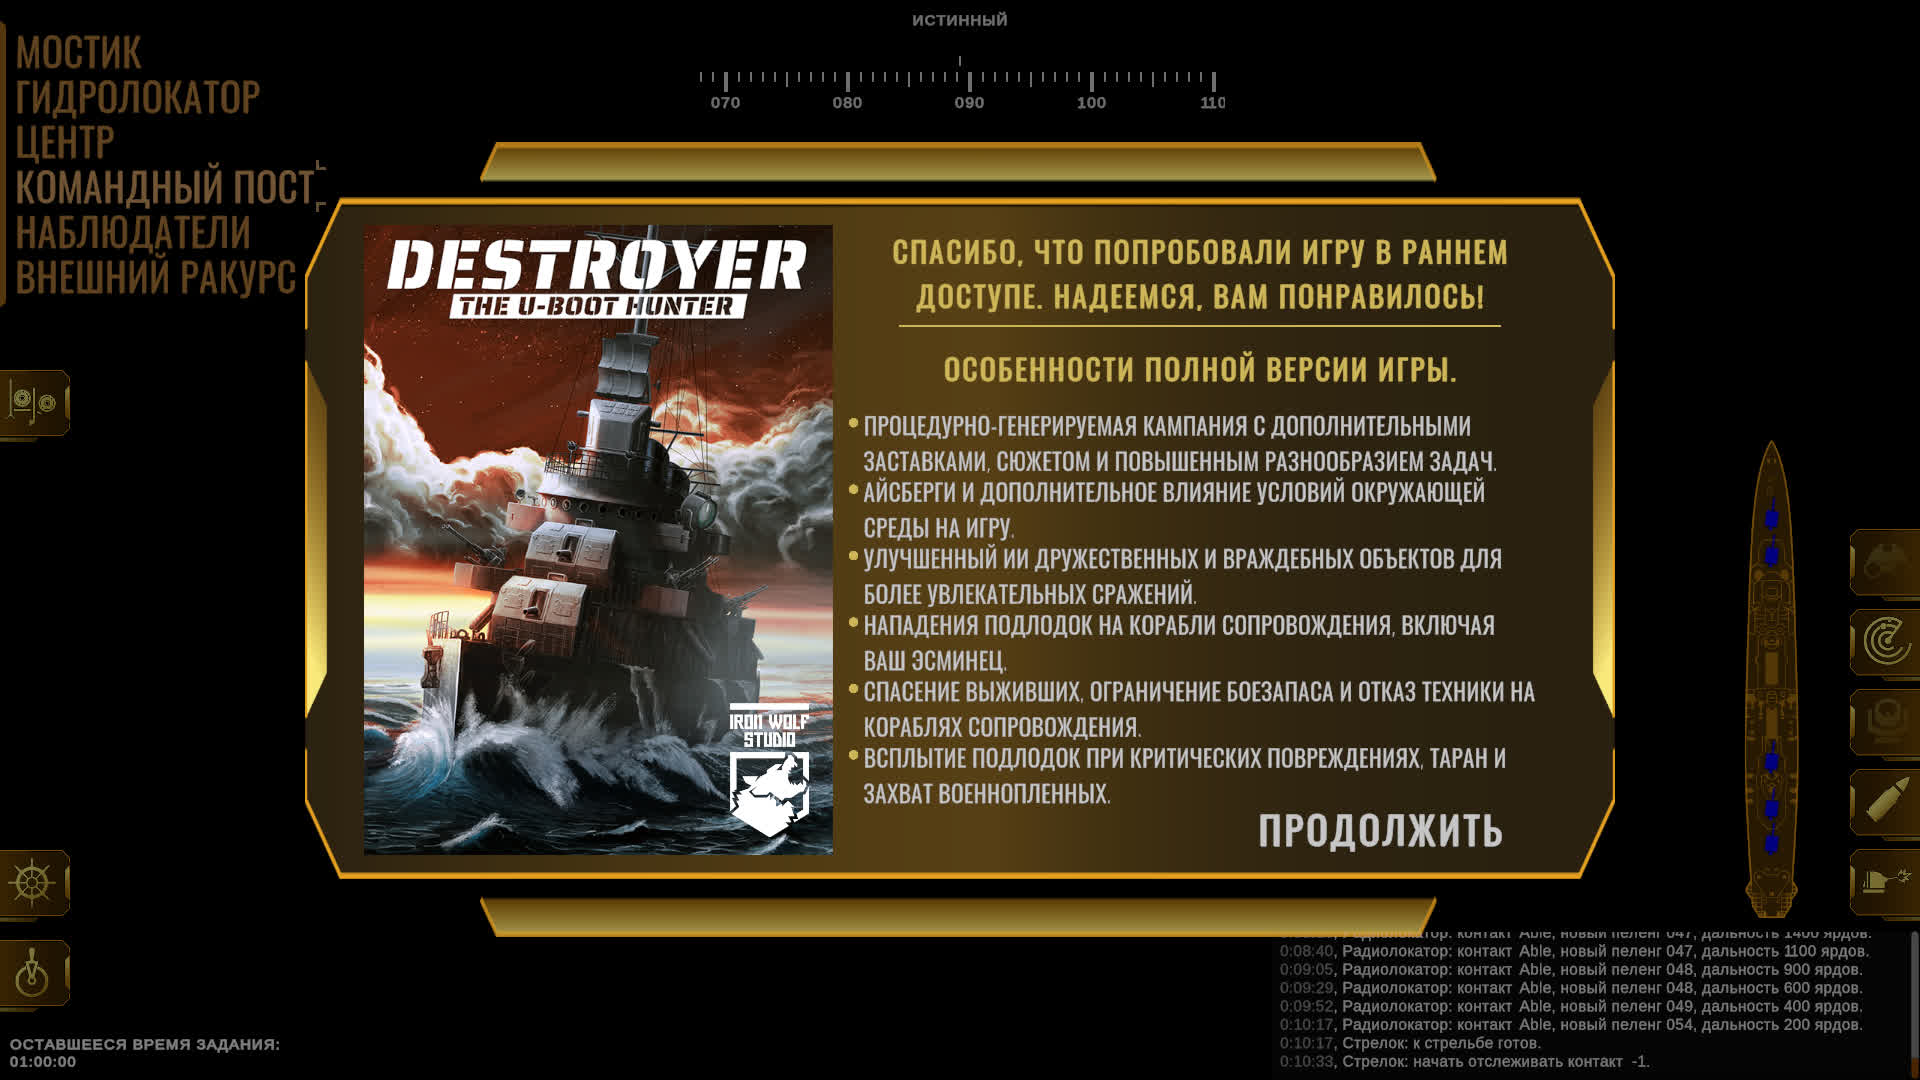 Destroyer The U-Boat Hunter - что будет на релизе